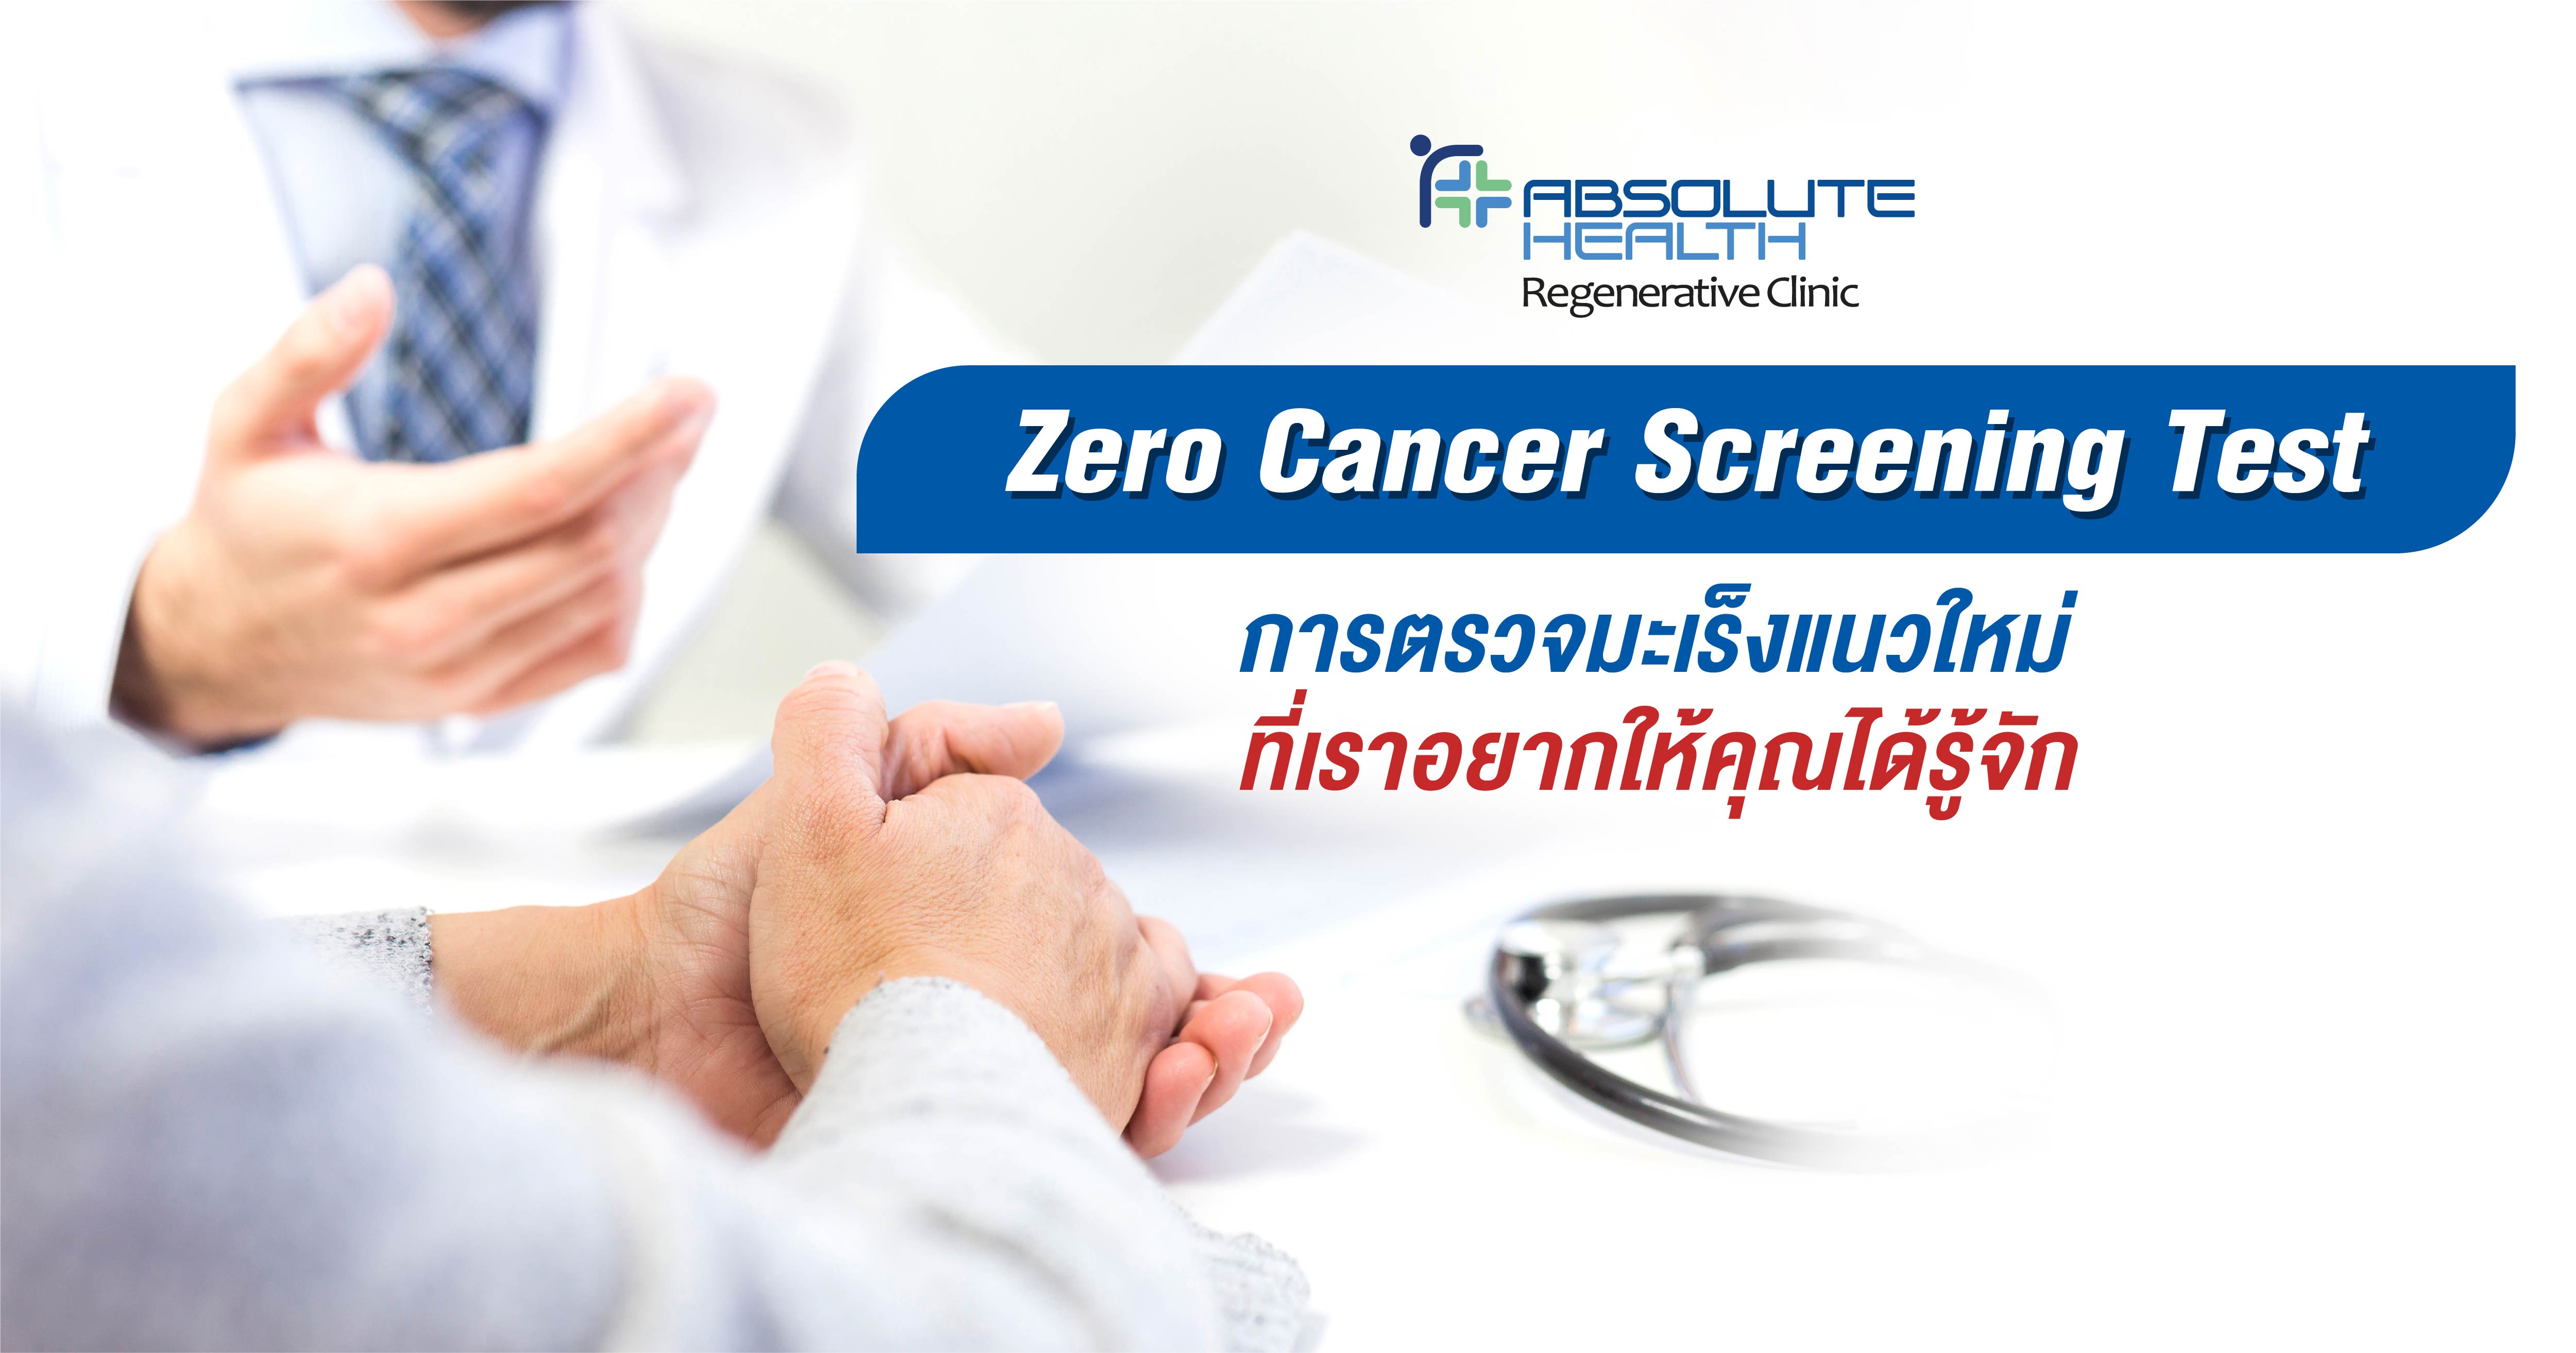 Zero Cancer Screening Test  การตรวจมะเร็งแนวใหม่ ที่เราอยากให้คุณได้รู้จัก